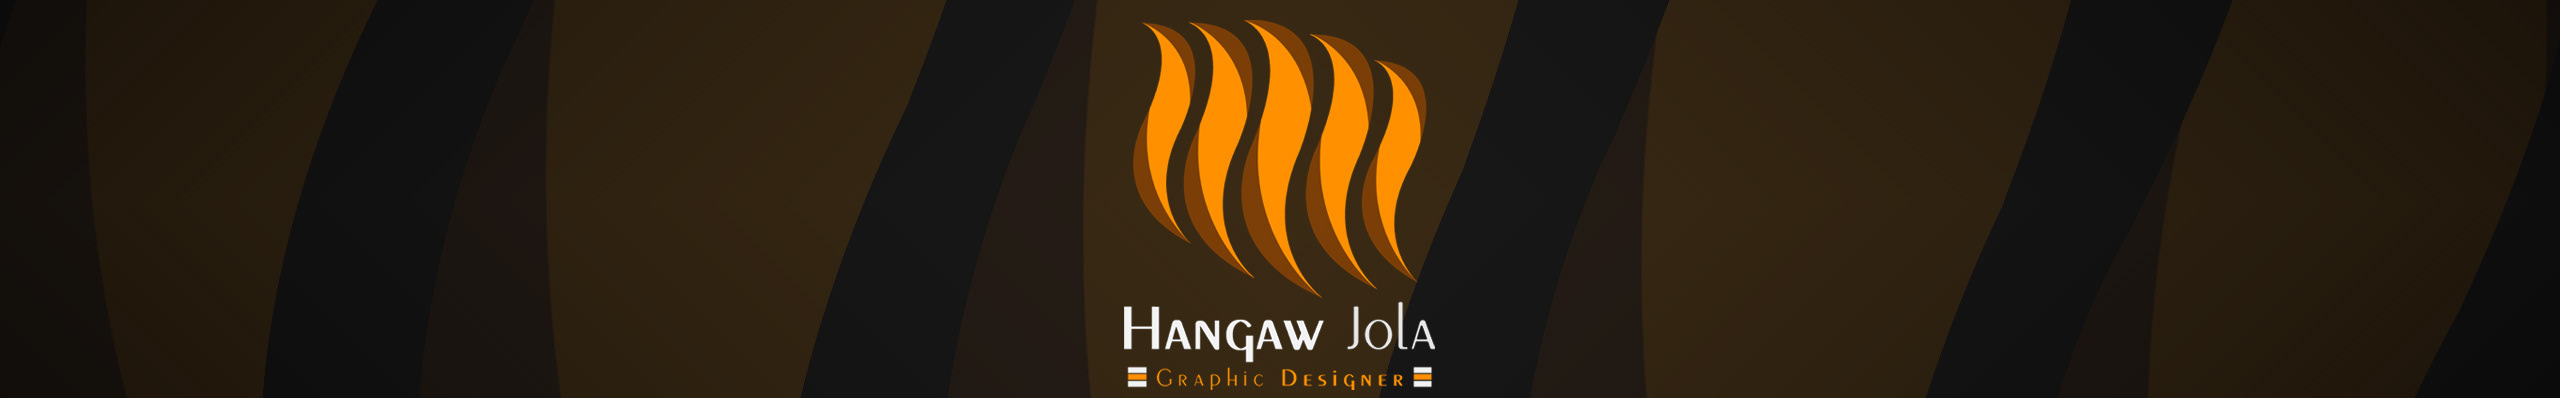 Hangaw Jola's profile banner